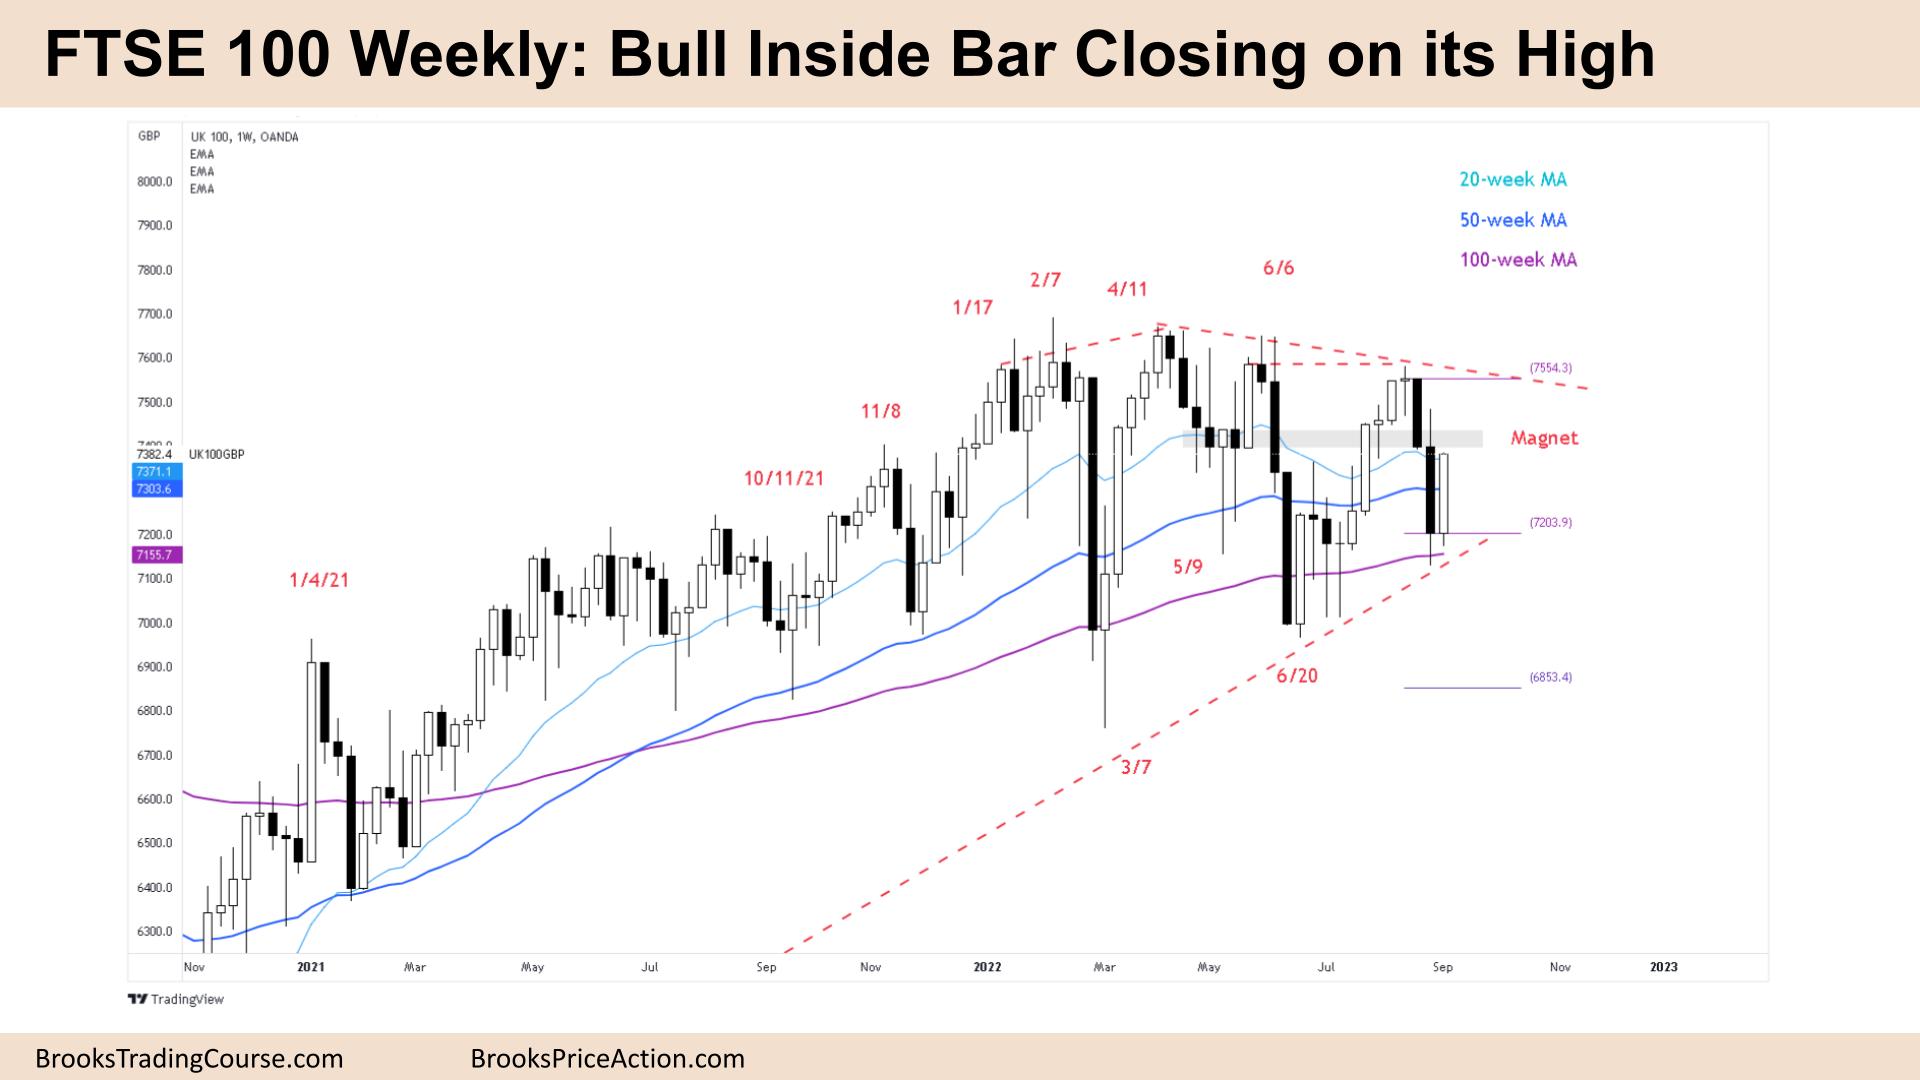 FTSE 100 Bull Inside Bar Closing on its High